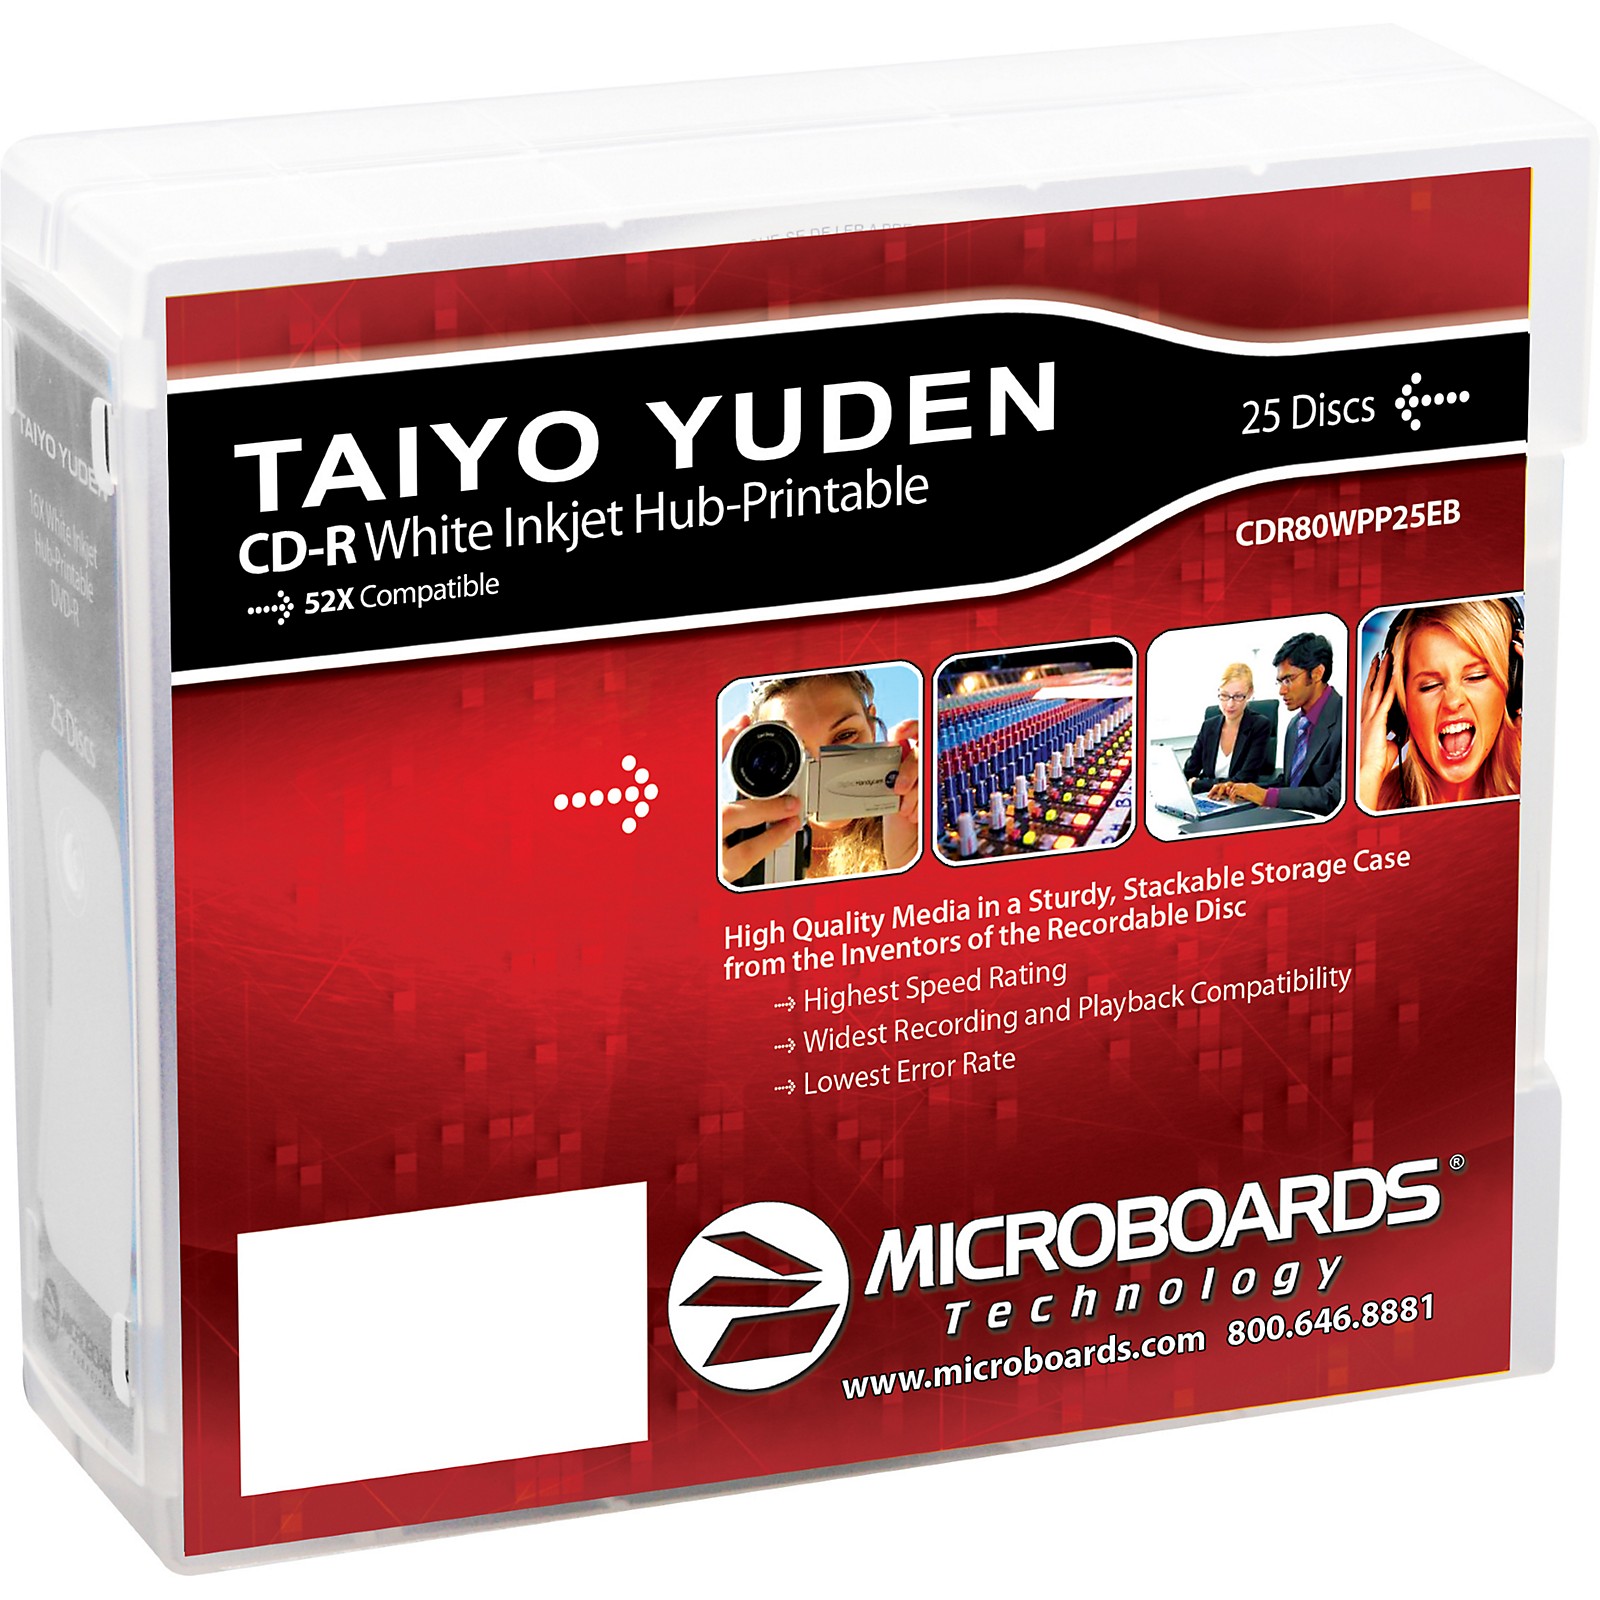 taiyo-yuden-cd-r-52x-white-inkjet-printable-and-hub-printable-25-disc